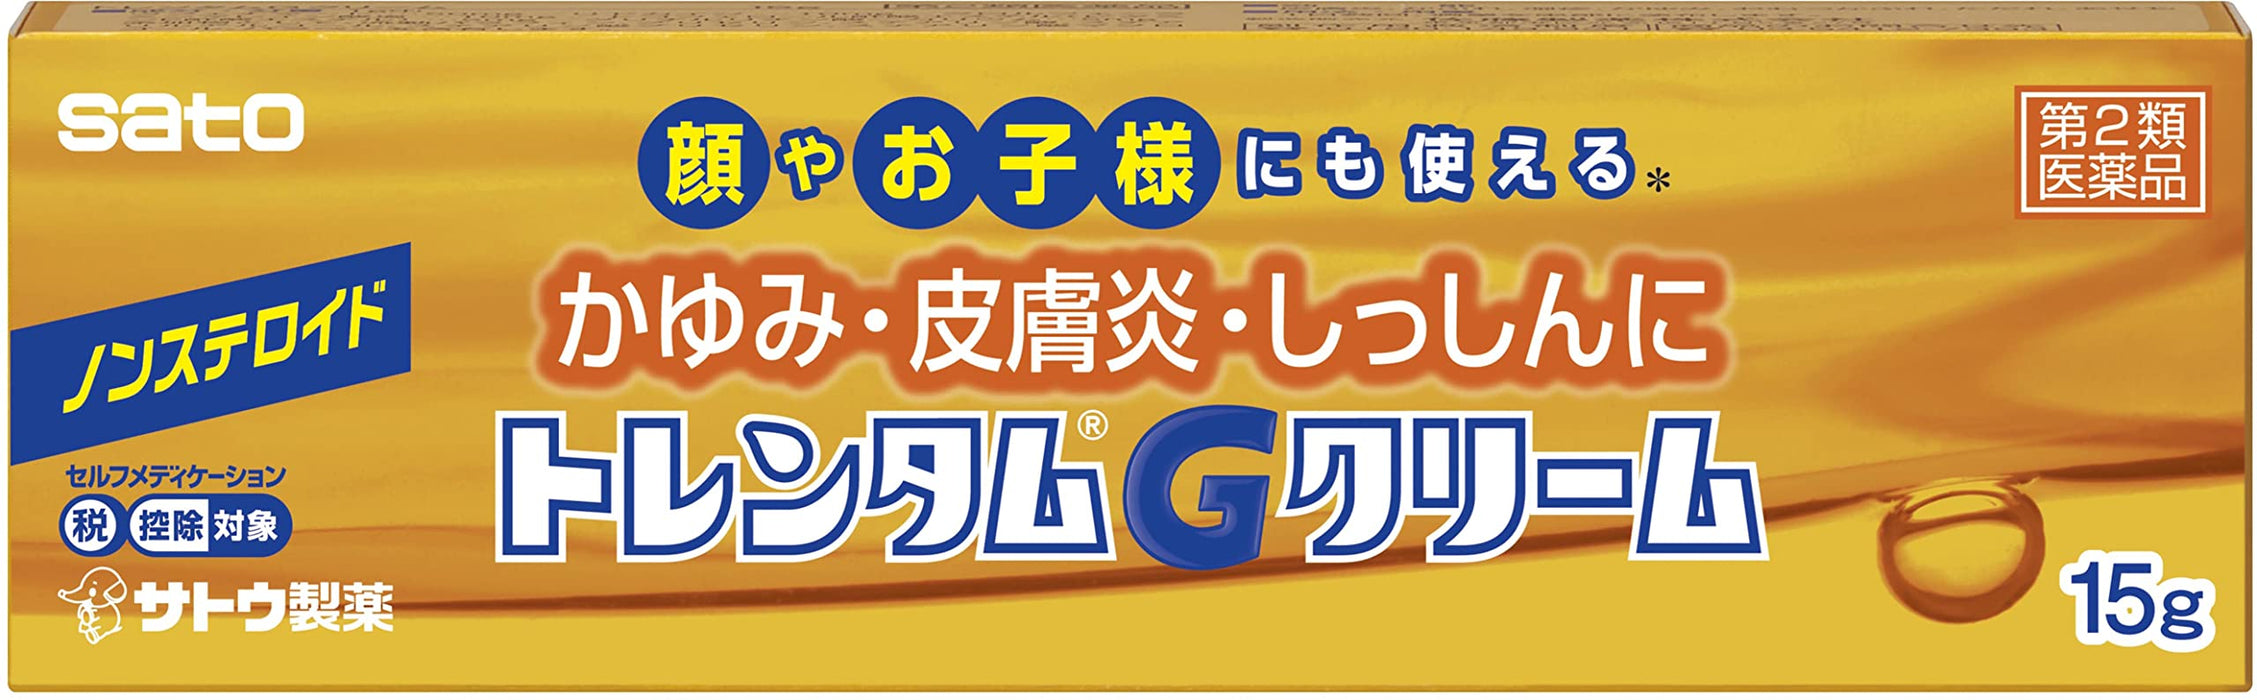 Trentum G Cream 15G By Sato Pharmaceutical - Japan 2Nd Class Otc Drug